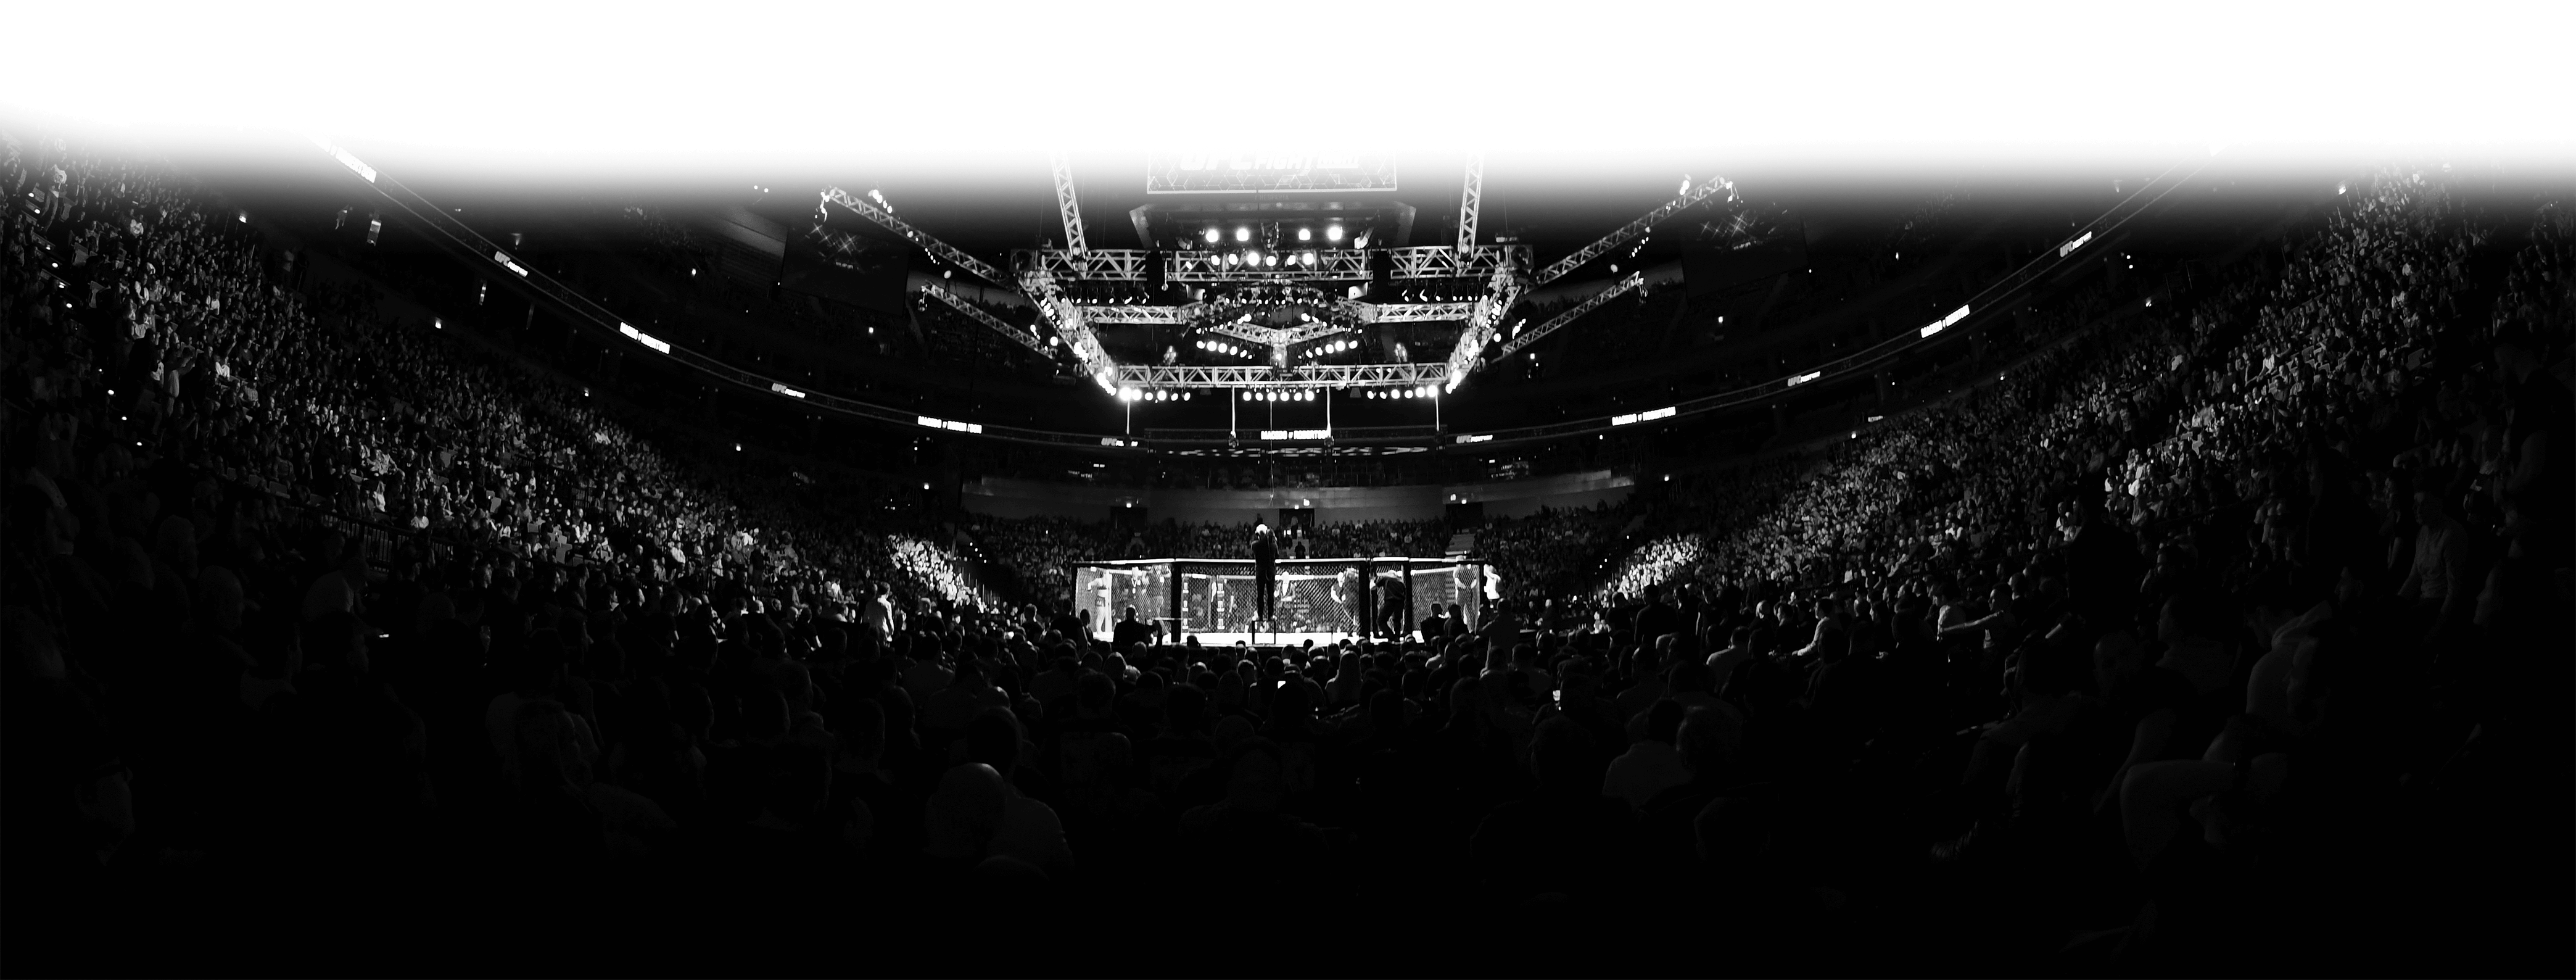 UFC black and white stadium lights and ring